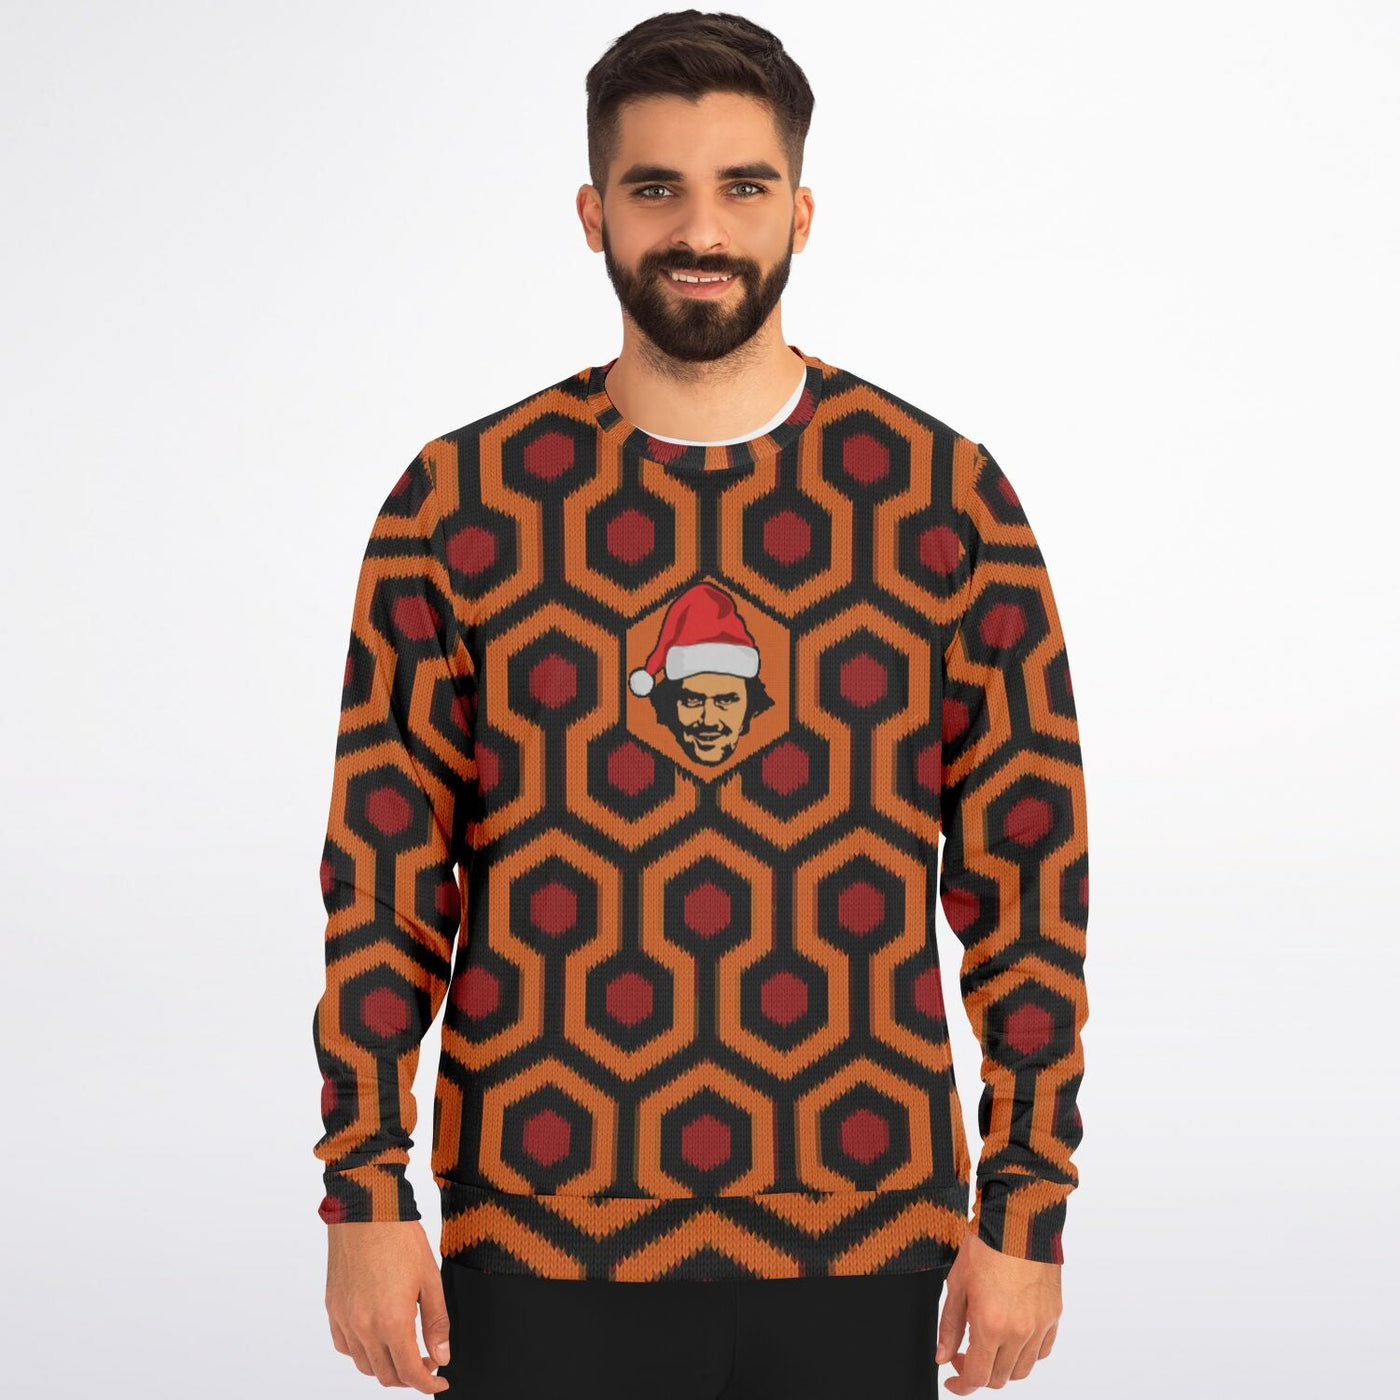 Redrum 237 - The Shining Christmas Sweater | Ugly X-mas sweatshirt